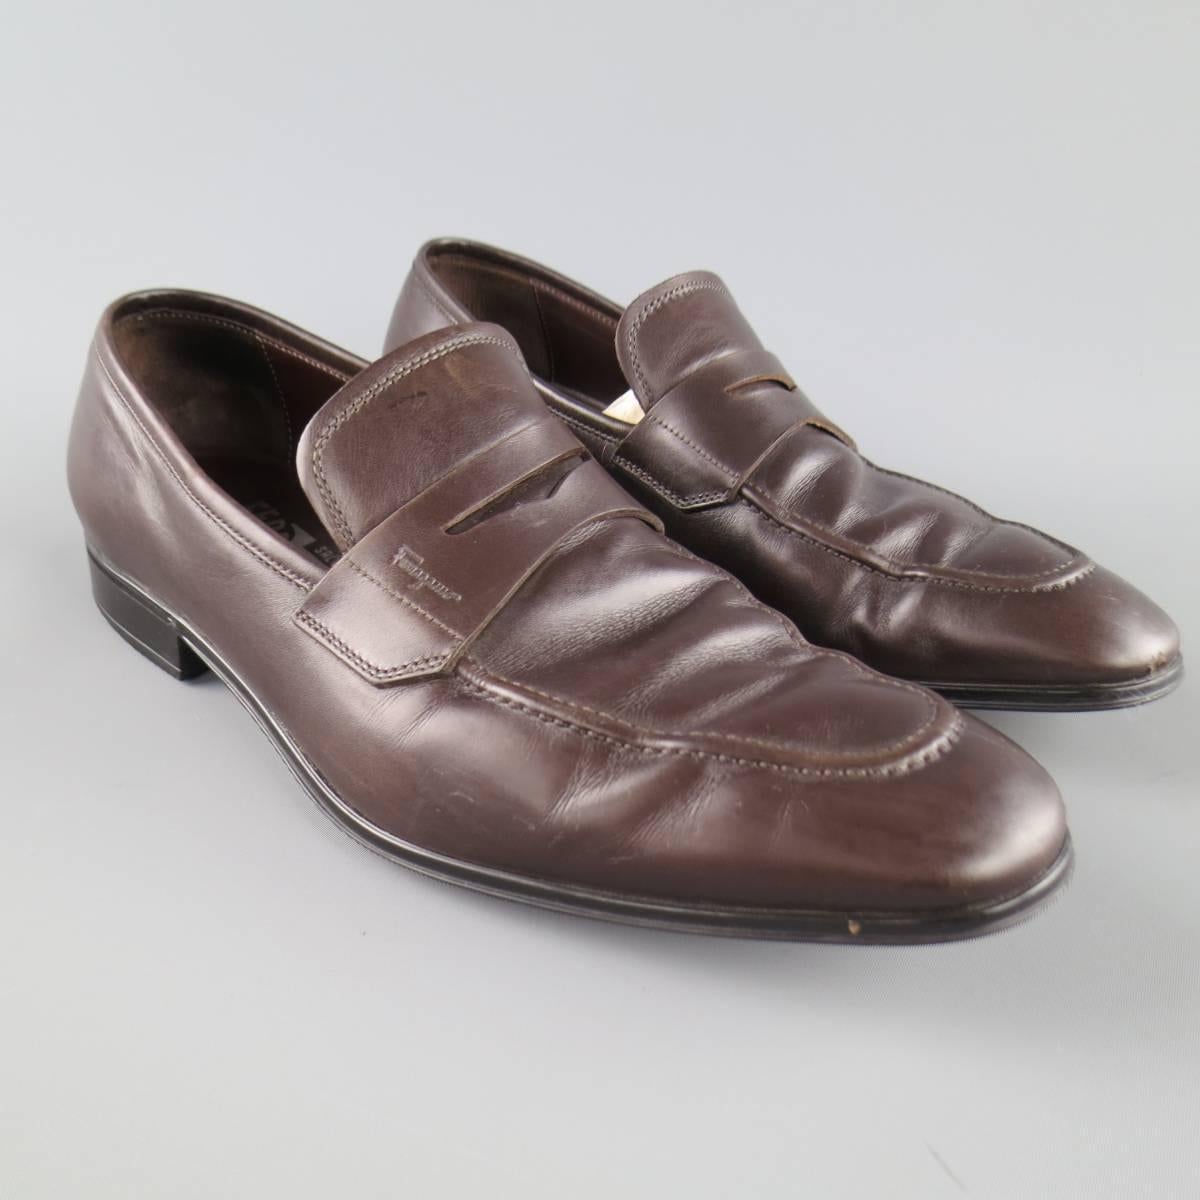 Men's SALVATORE FERRAGAMO Size 8.5 Brown Leather Penny Loafers (Grau)